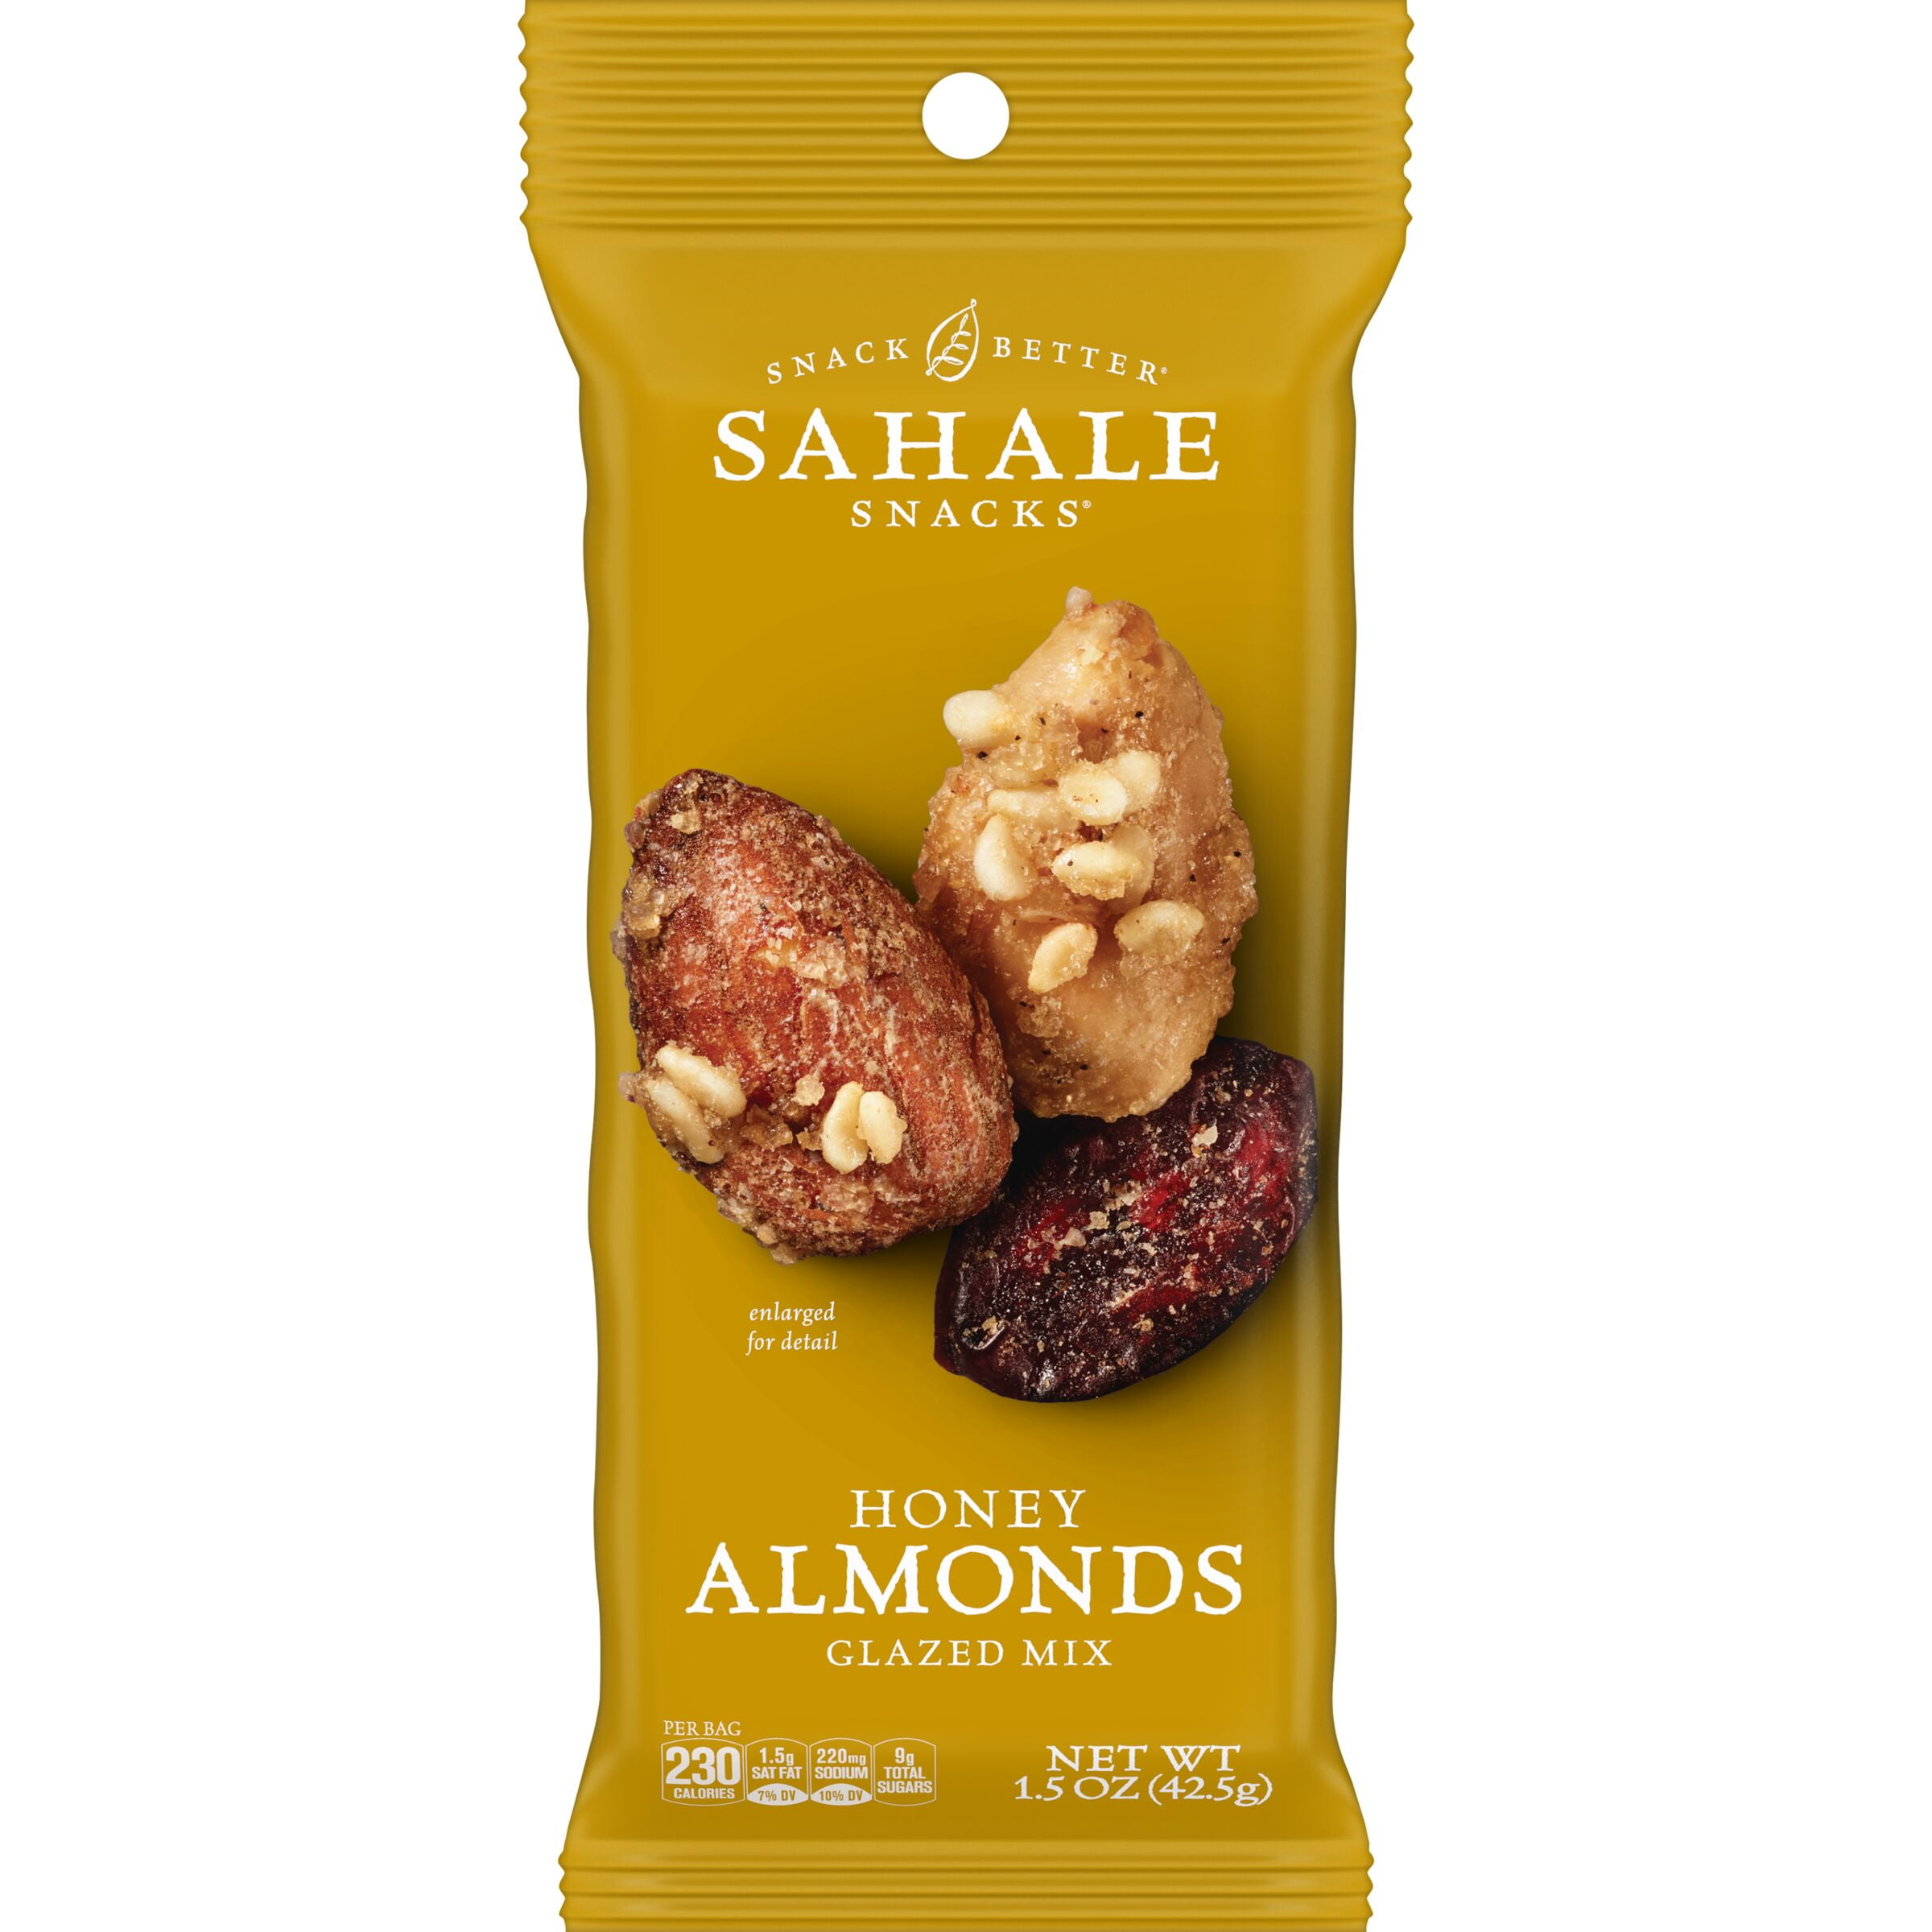 Sahale Snacks Honey Almonds Glazed Mix-Pack of 18, 1.5 oz. Packs-$1.68 Walmart-HUGE YMMV